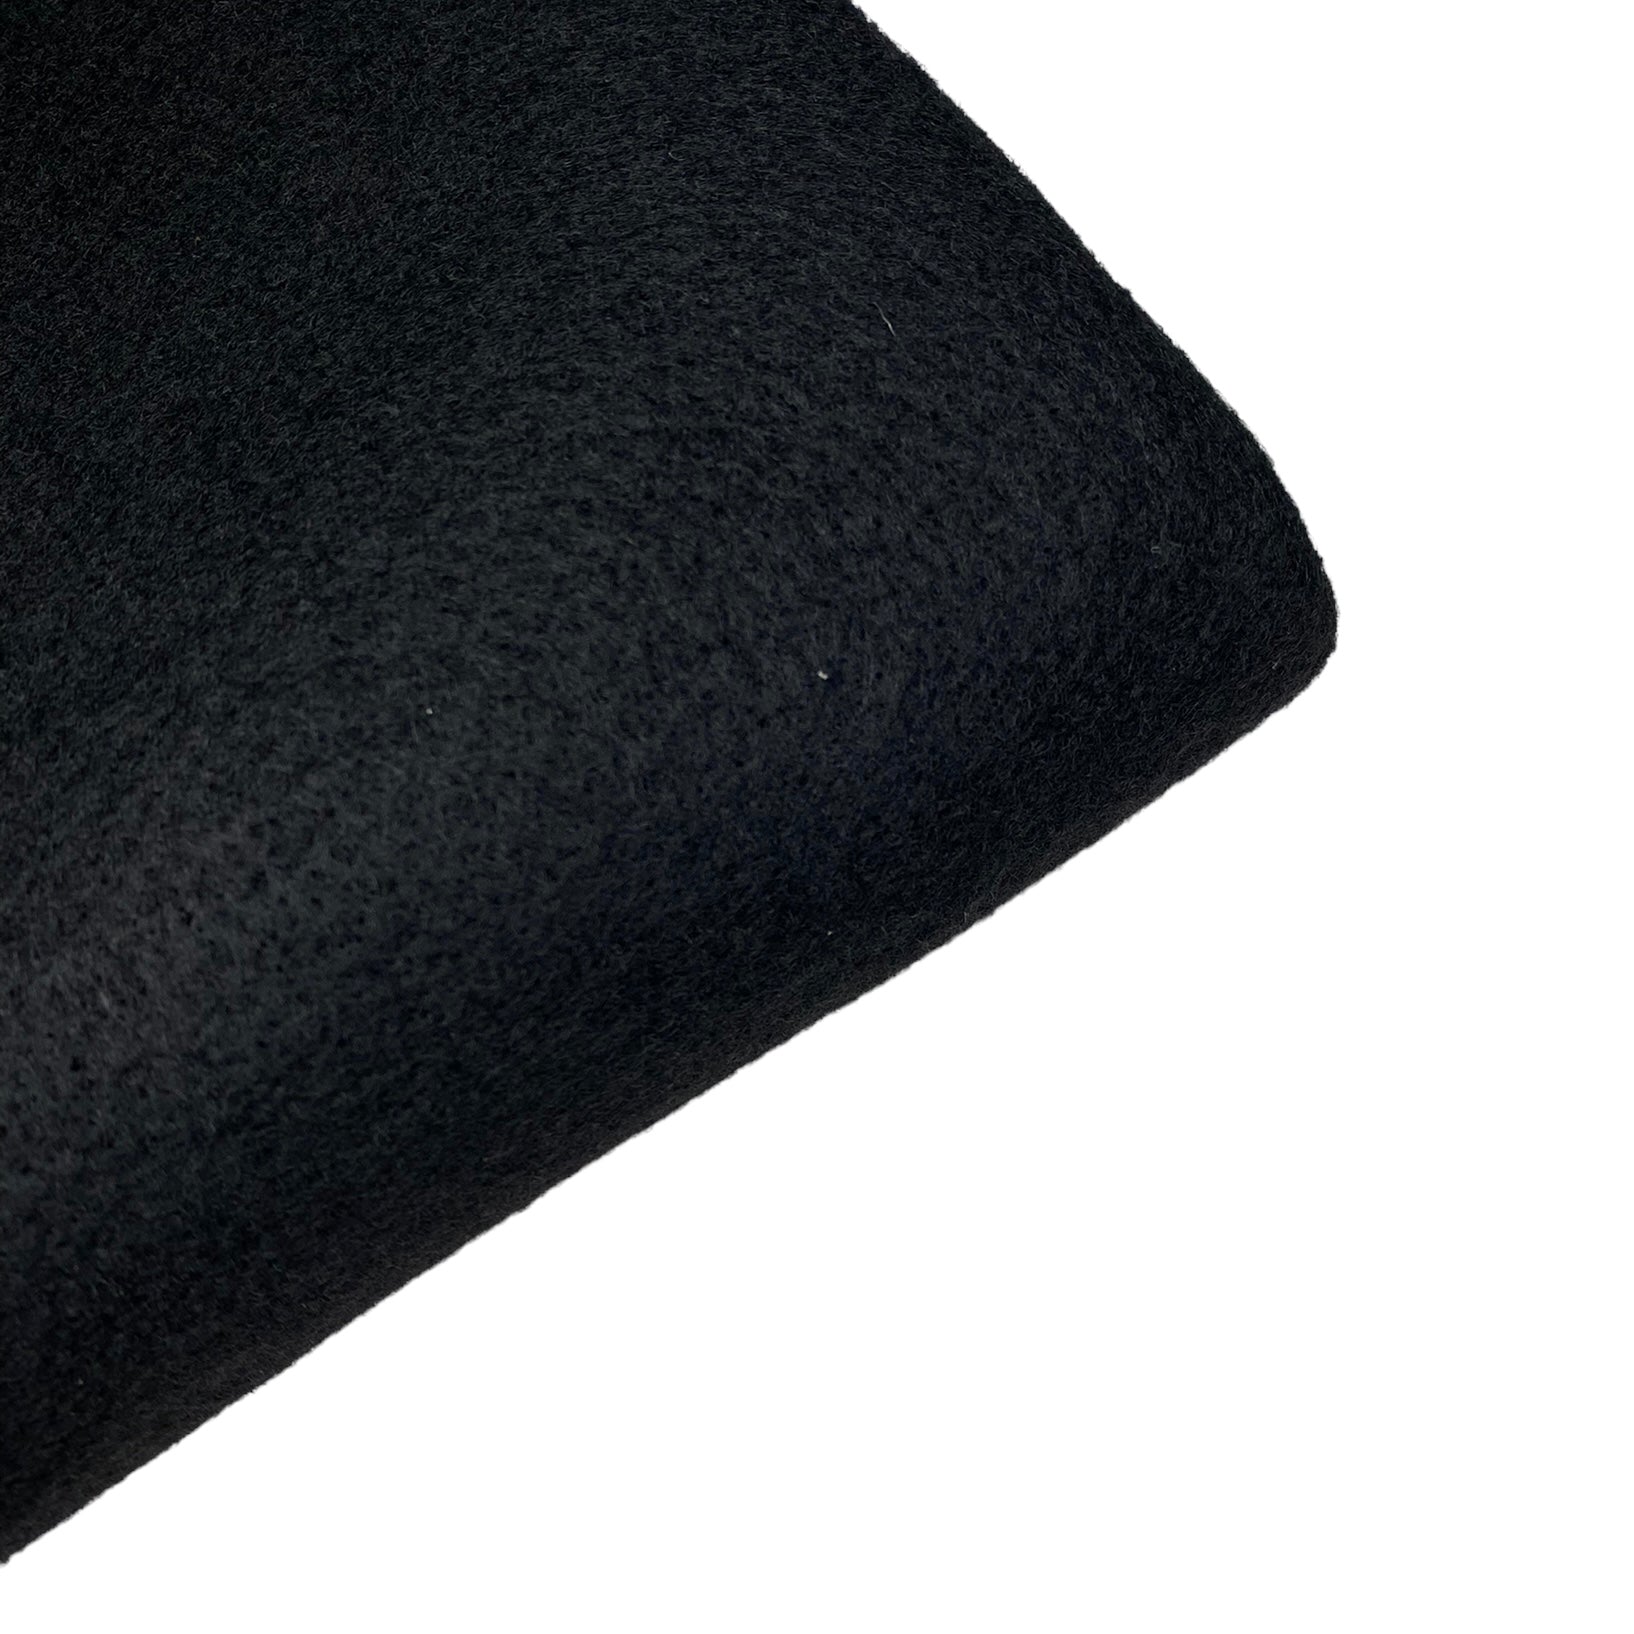 Felt Square Black 30% Wool - 9in / 22cm